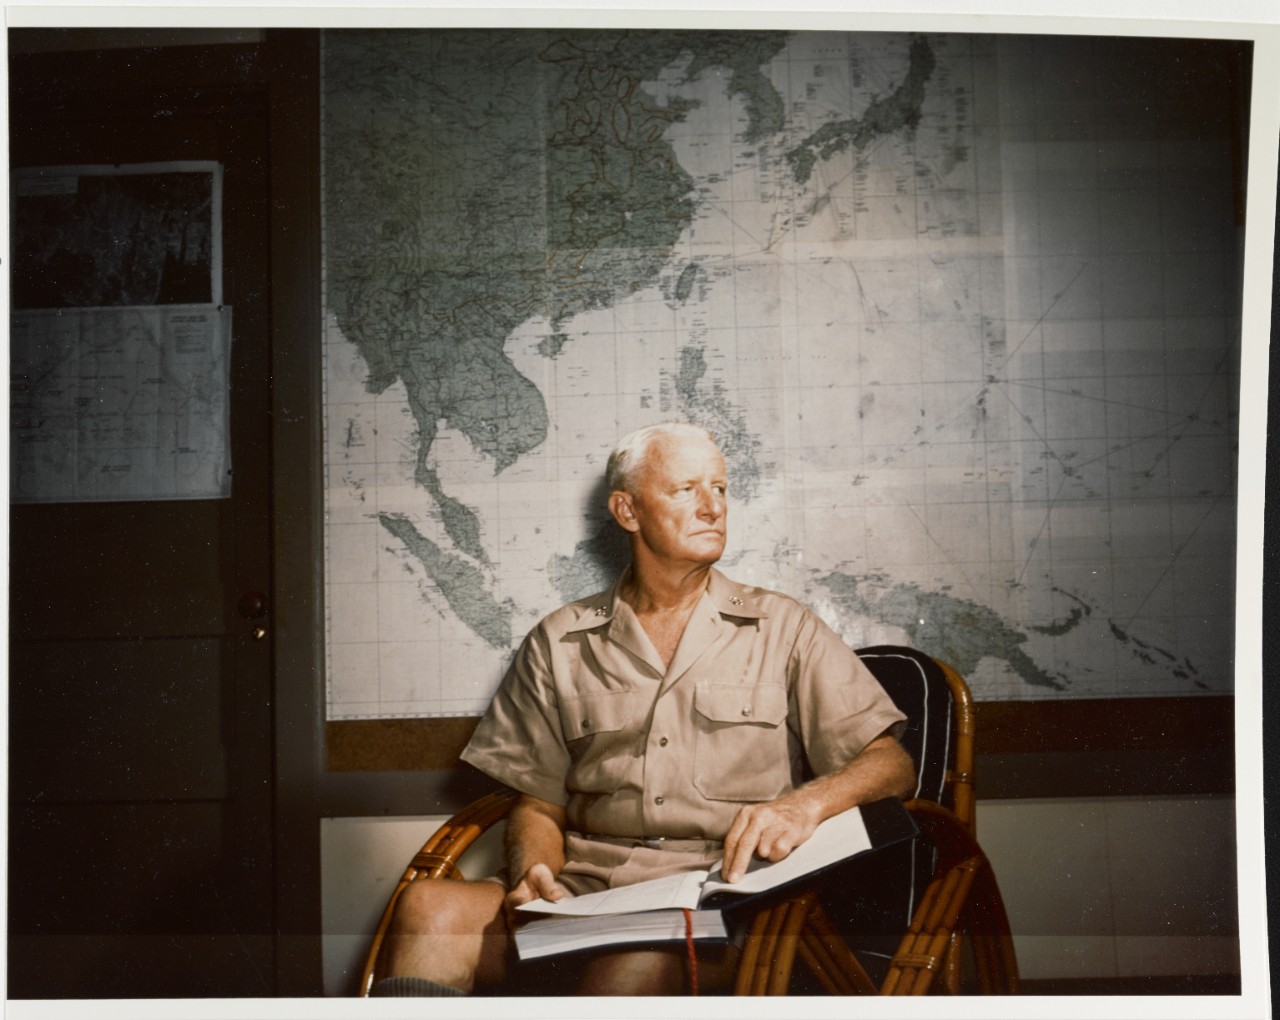 Fleet Admiral Chester W. Nimitz, Commander in Chief, Pacific Fleet and Pacific Ocean Areas